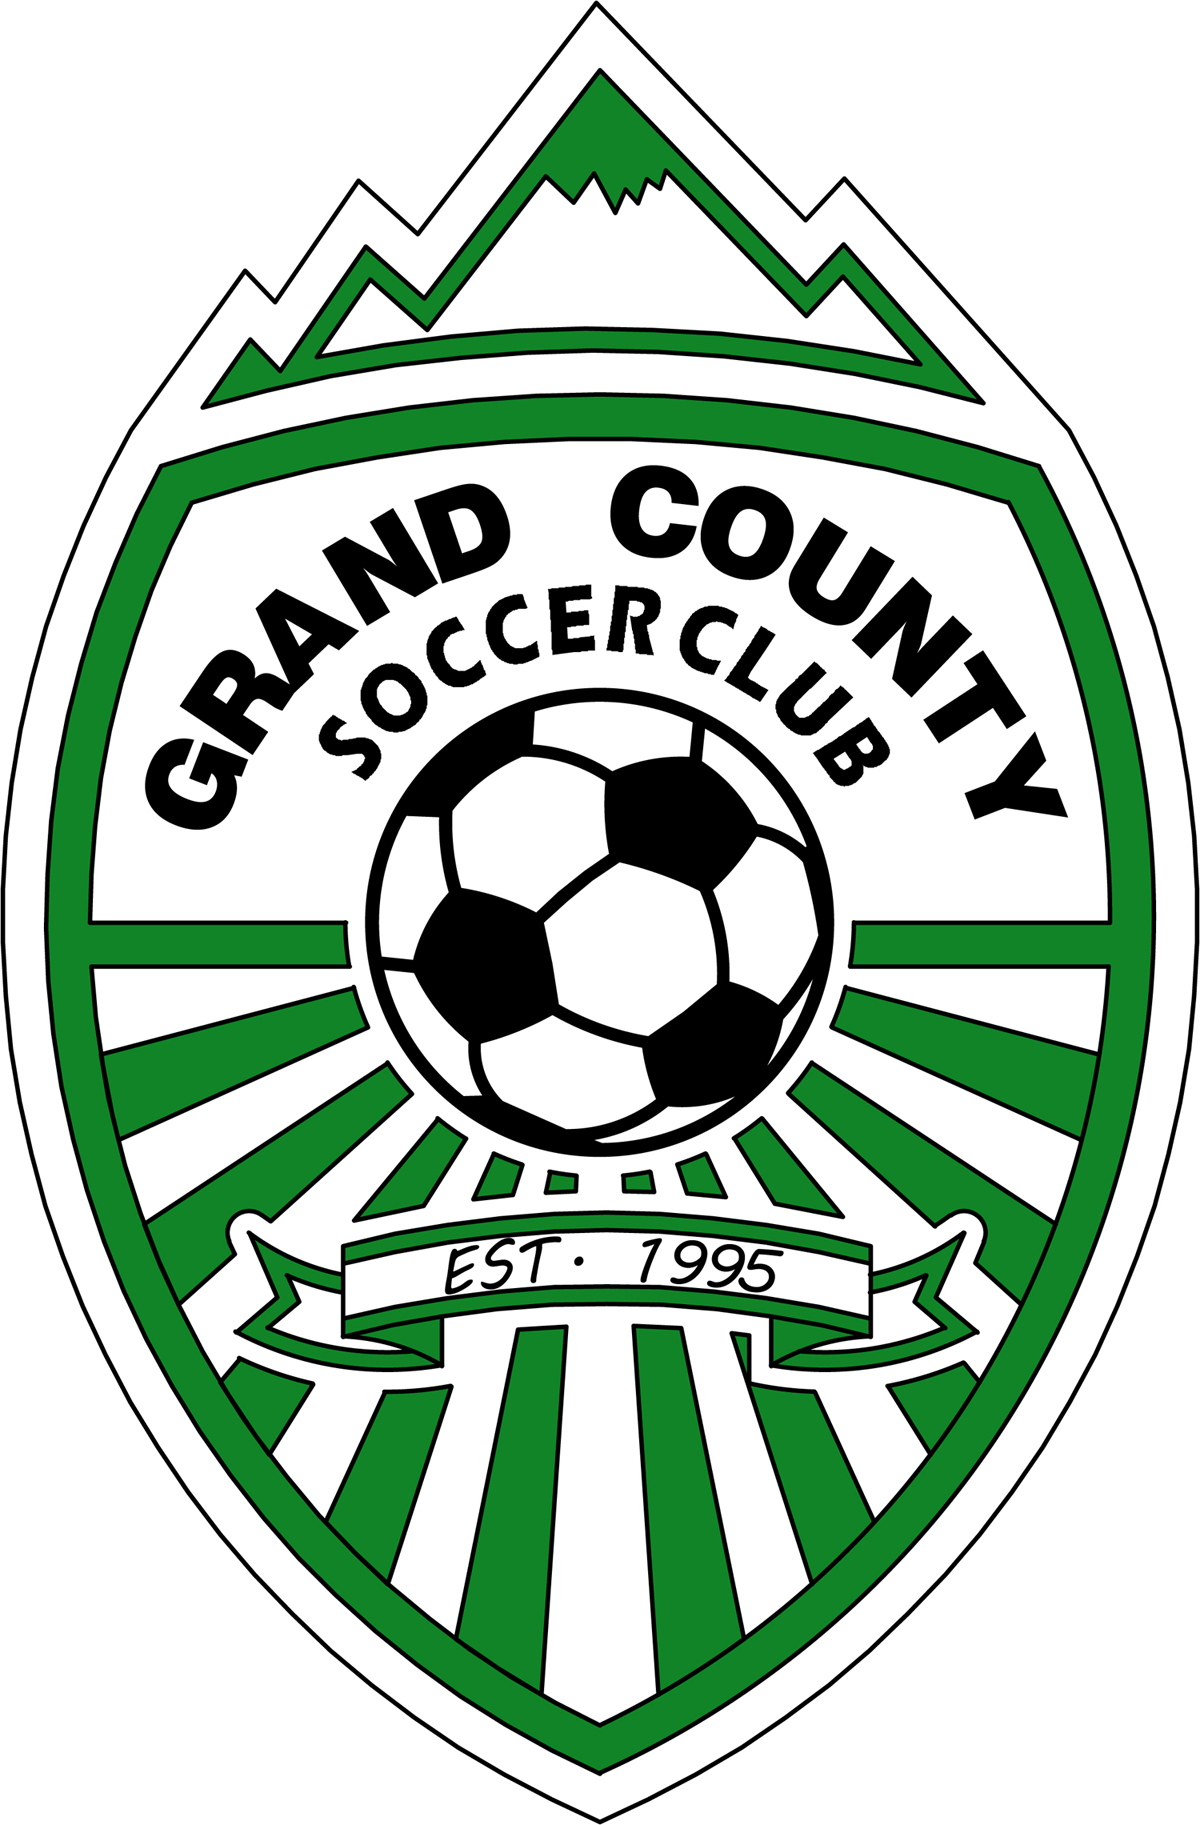 Grand County SC team badge